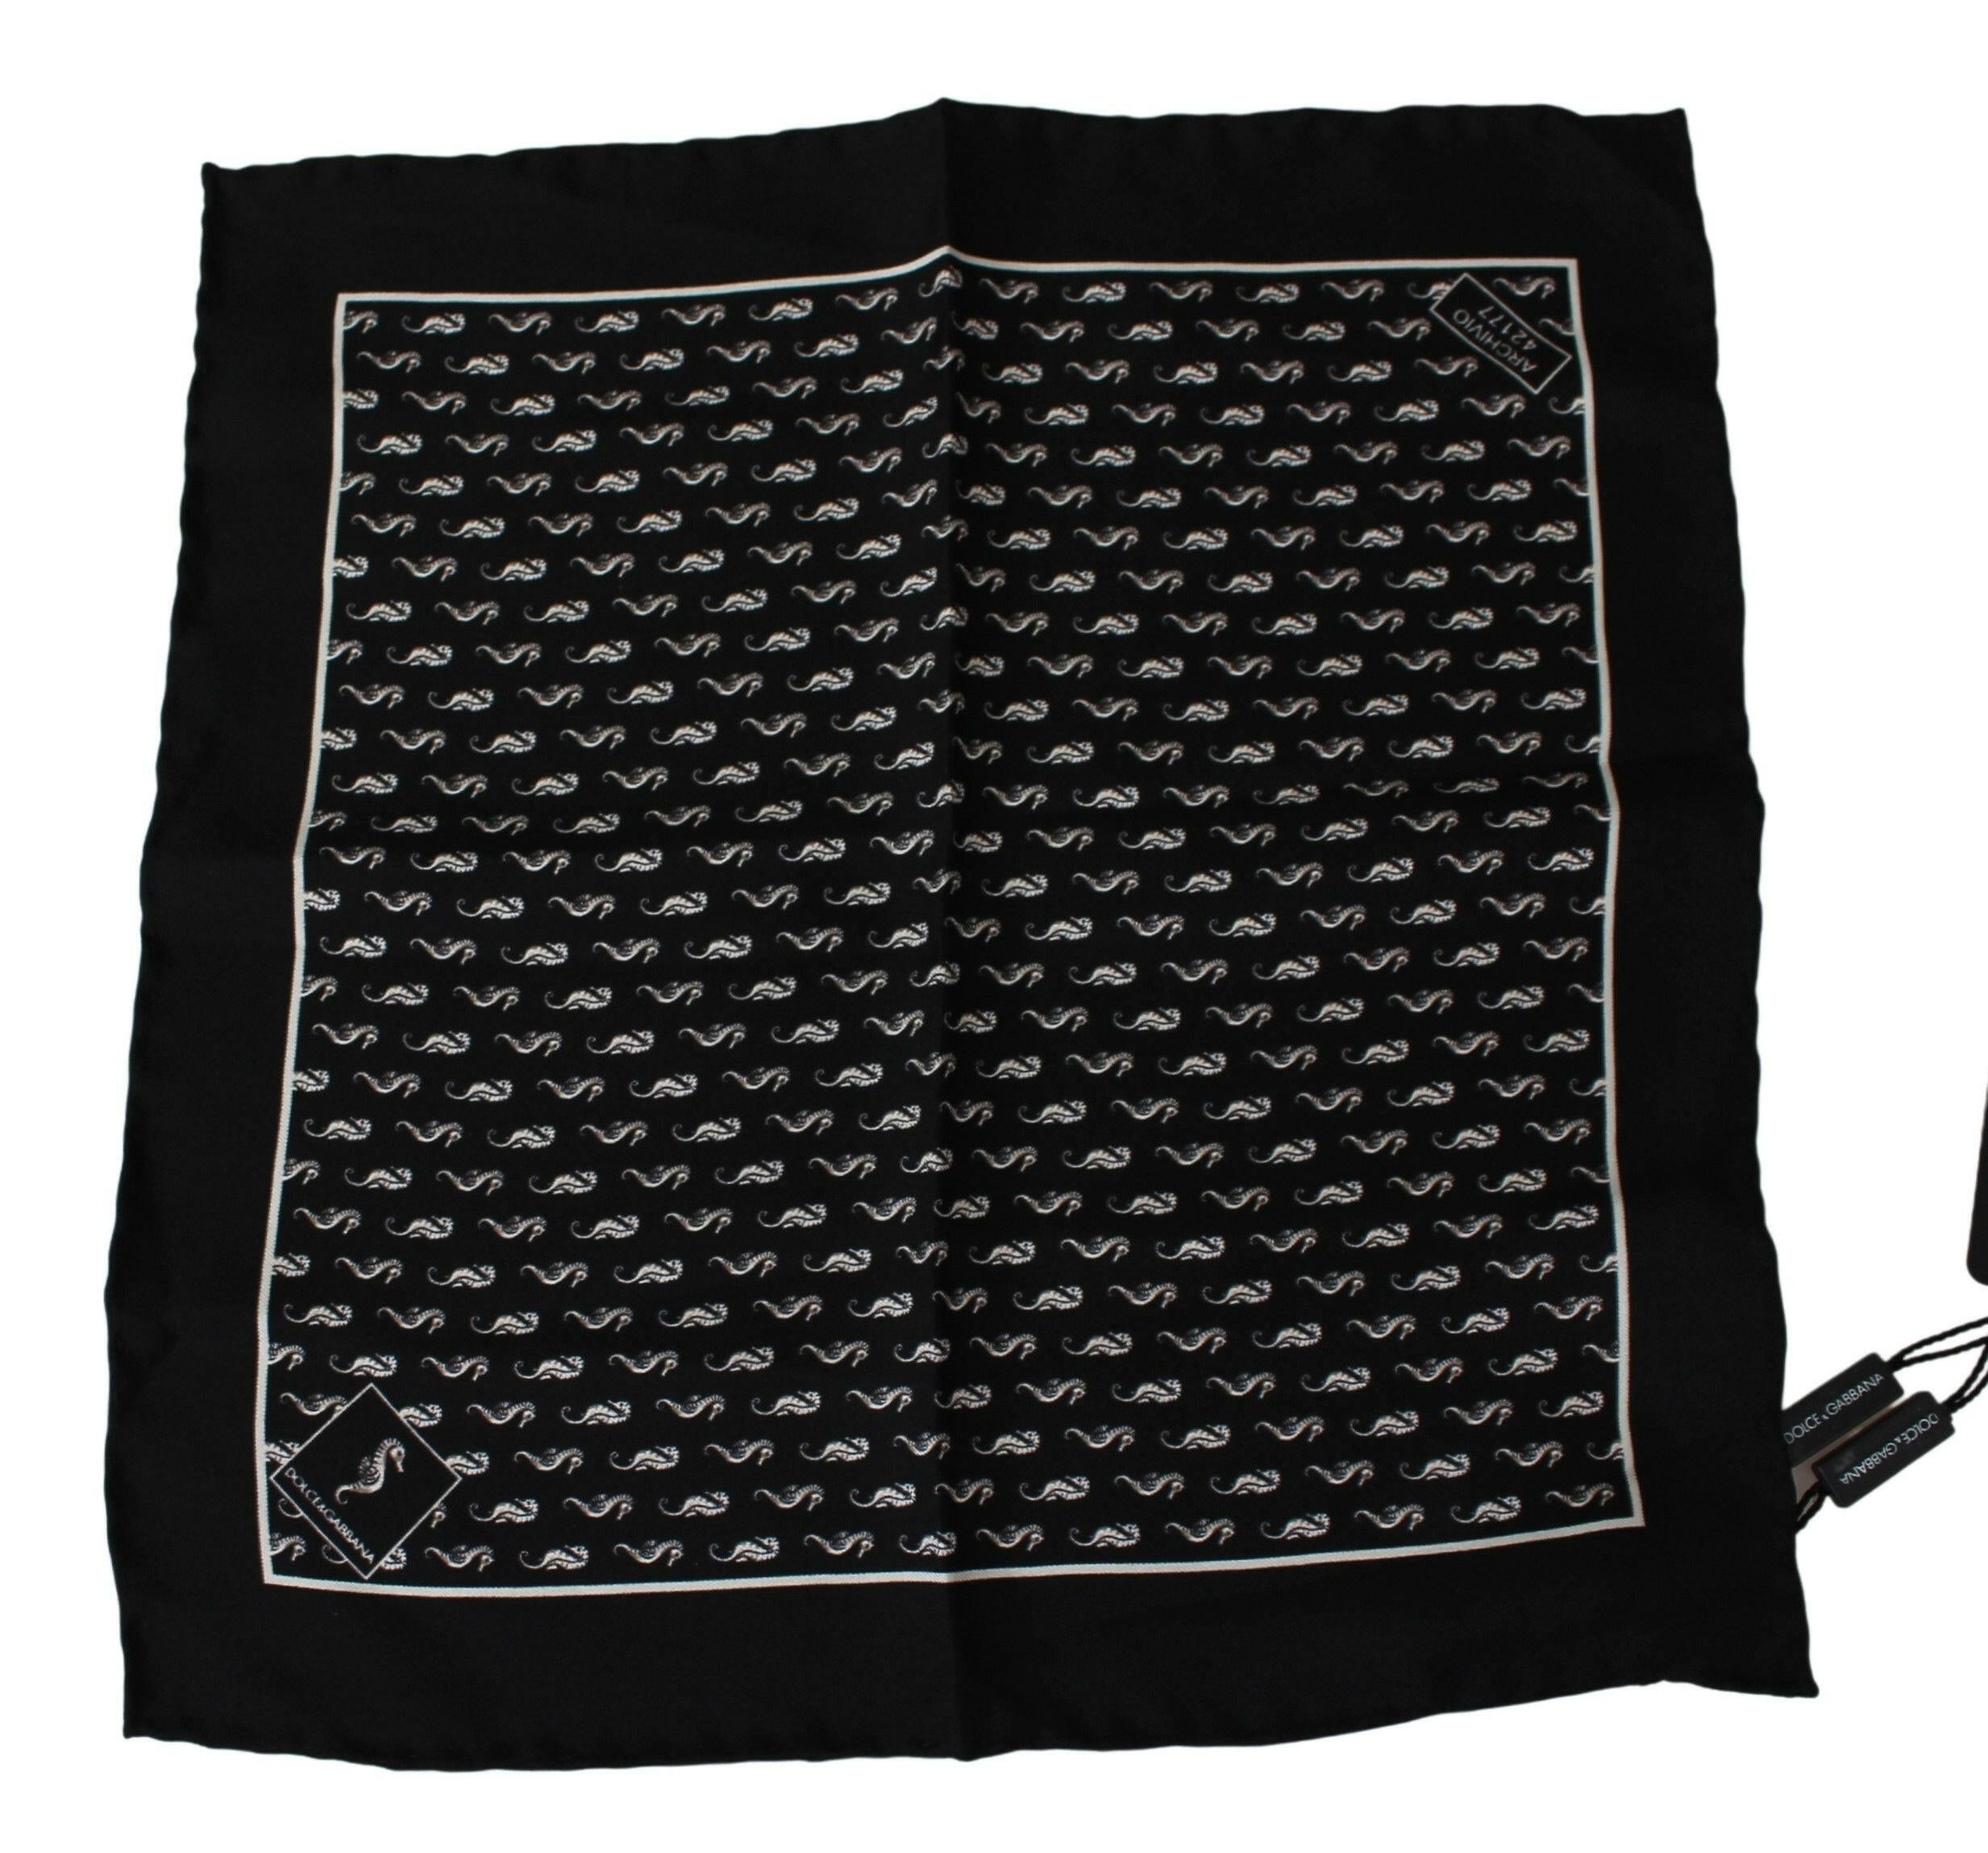 Dolce & Gabbana Scarf Black Seahorse Print Silk Handkerchief - GENUINE AUTHENTIC BRAND LLC  